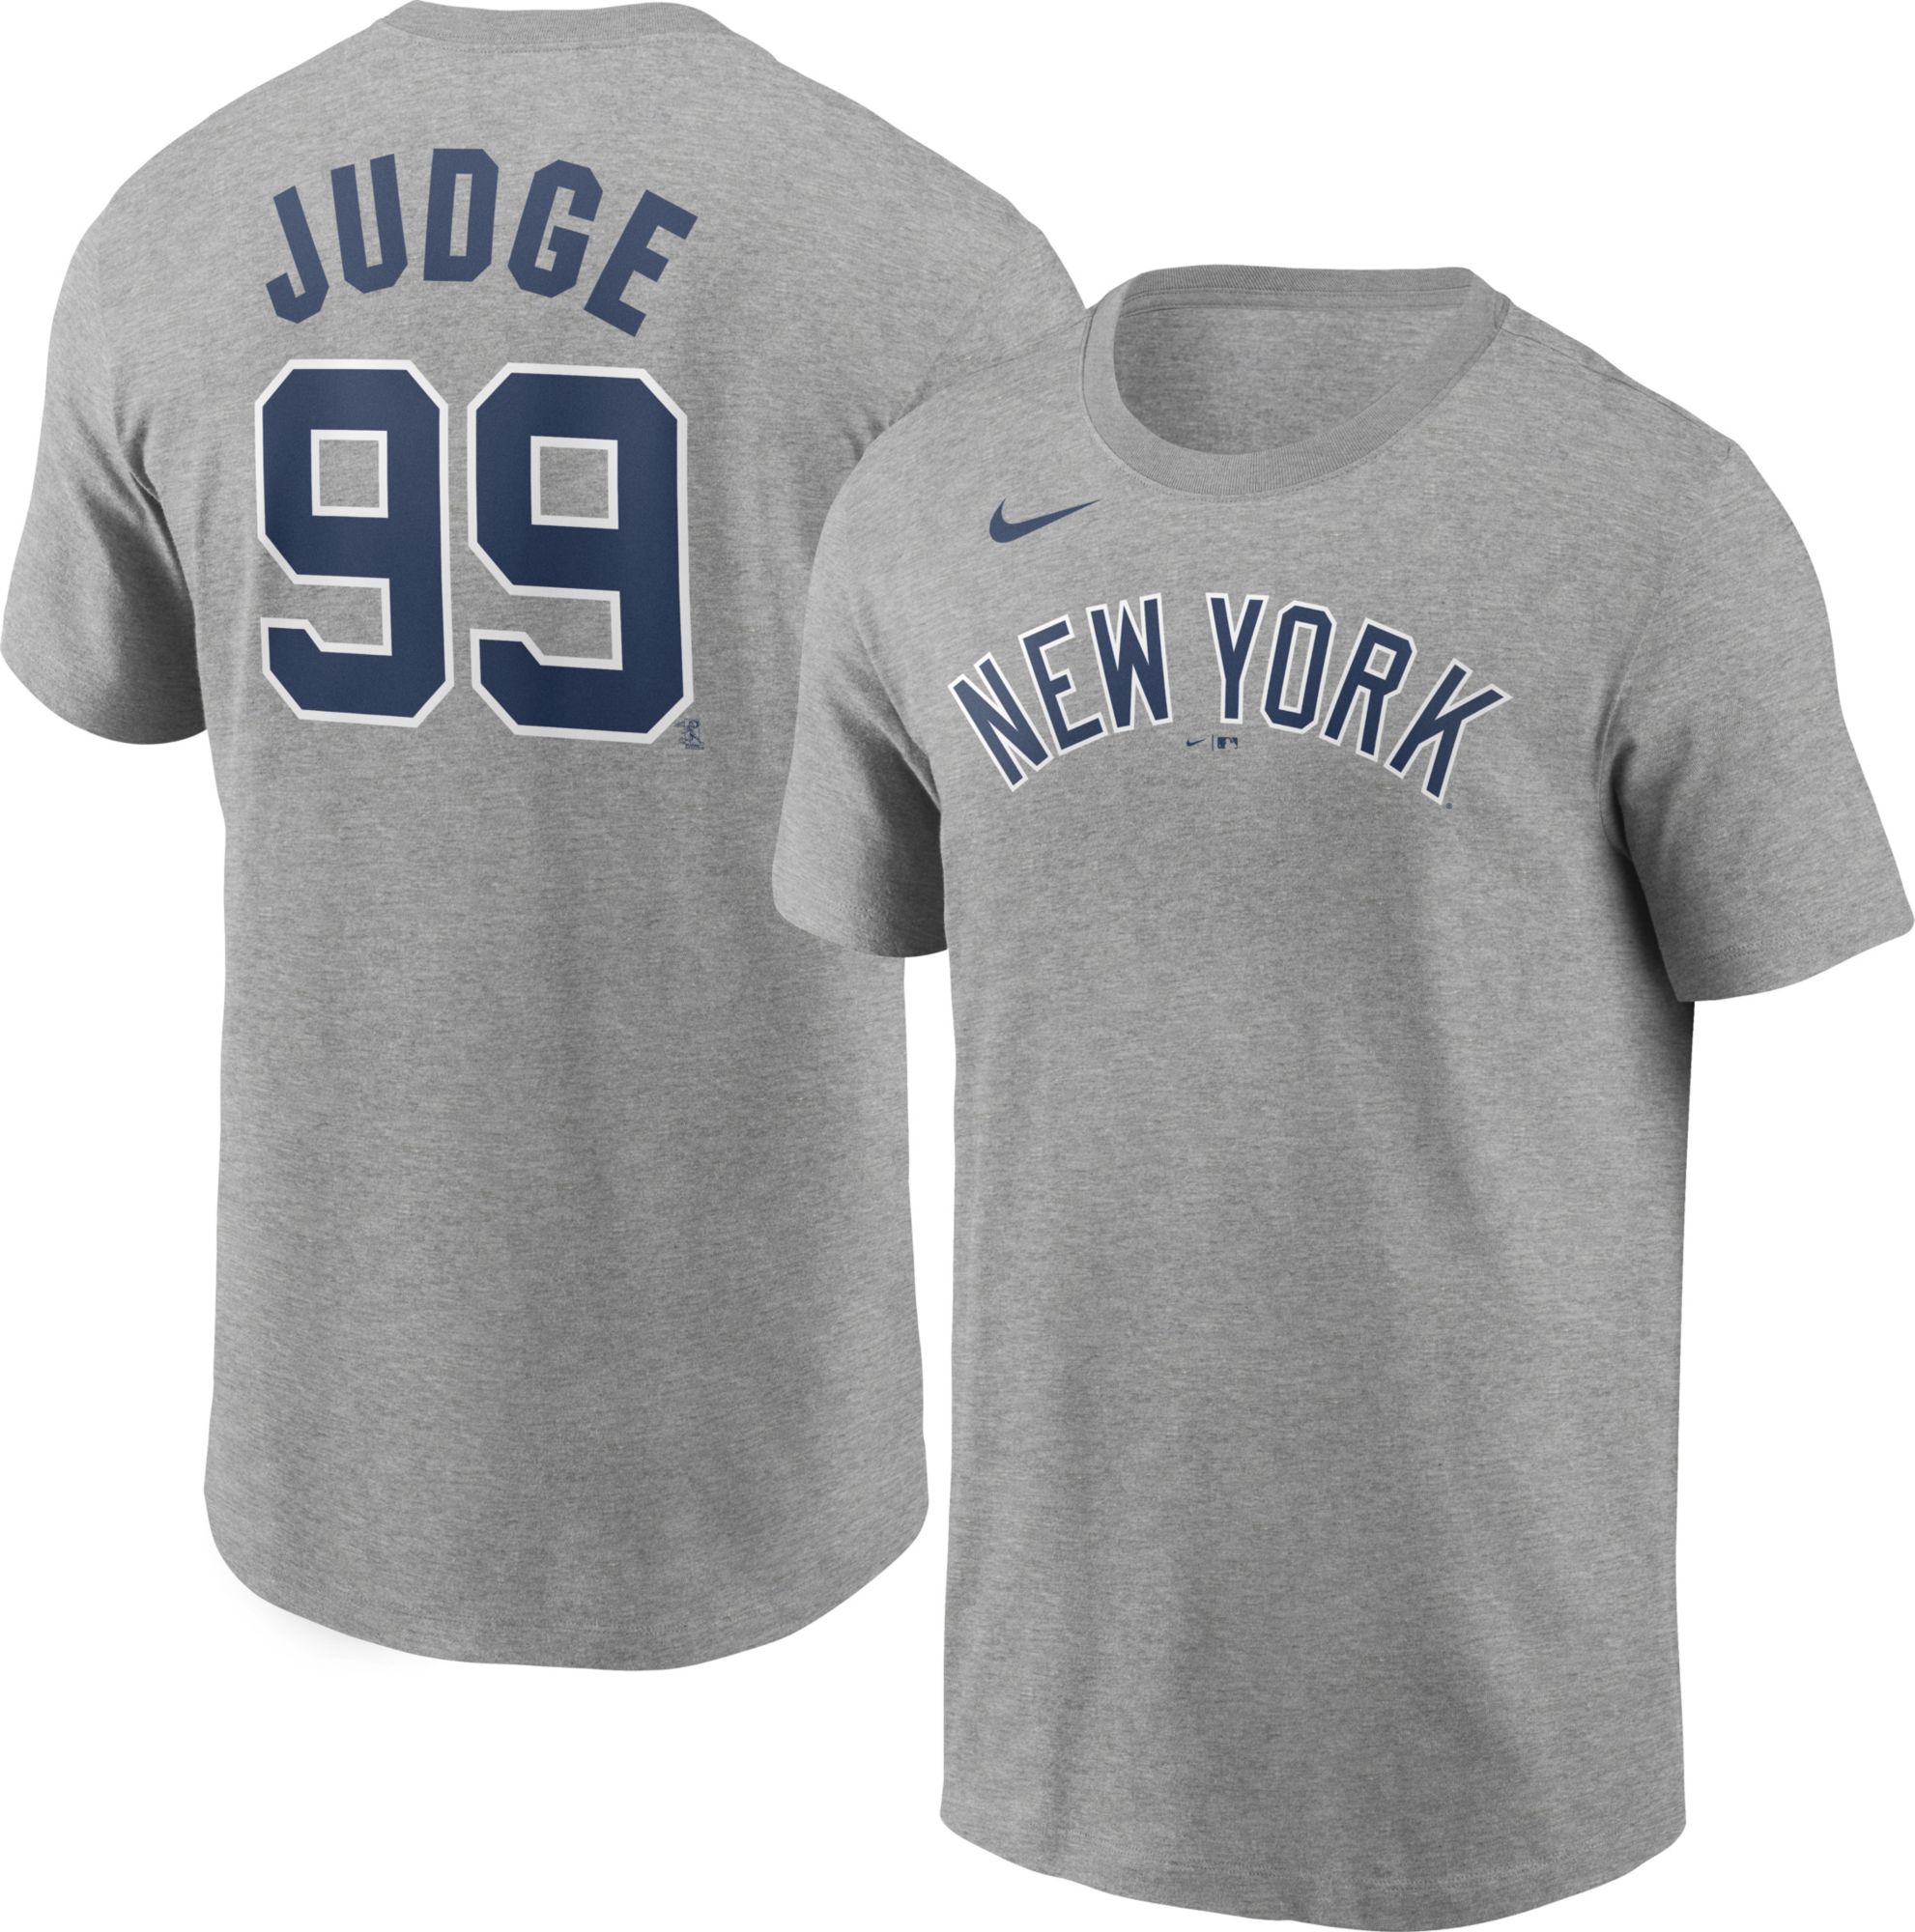 Best Aaron Judge 99 t shirts – Jersey number 99 funny Tees-Vaci – Vaciuk